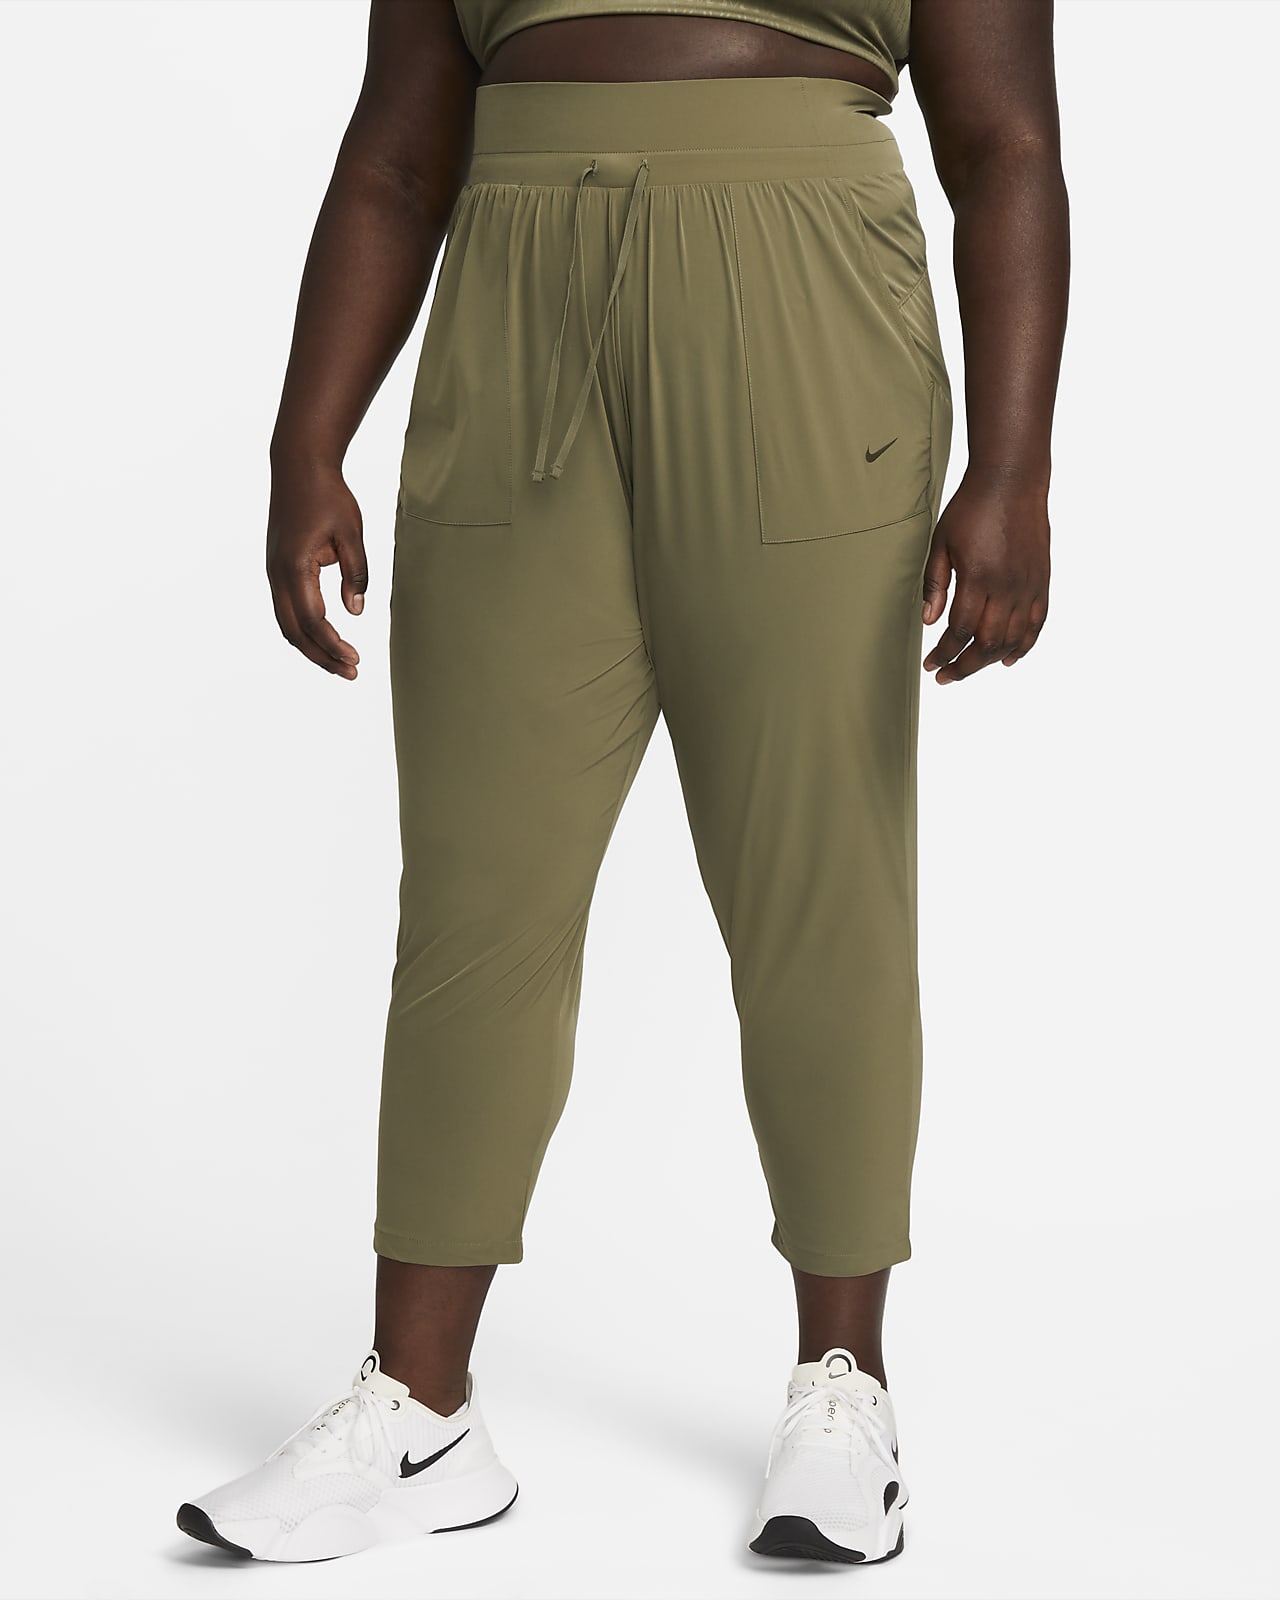 lengua Especialmente Desacuerdo Pantalones de entrenamiento de 7/8 para mujer Nike Bliss Luxe (talla grande).  Nike.com